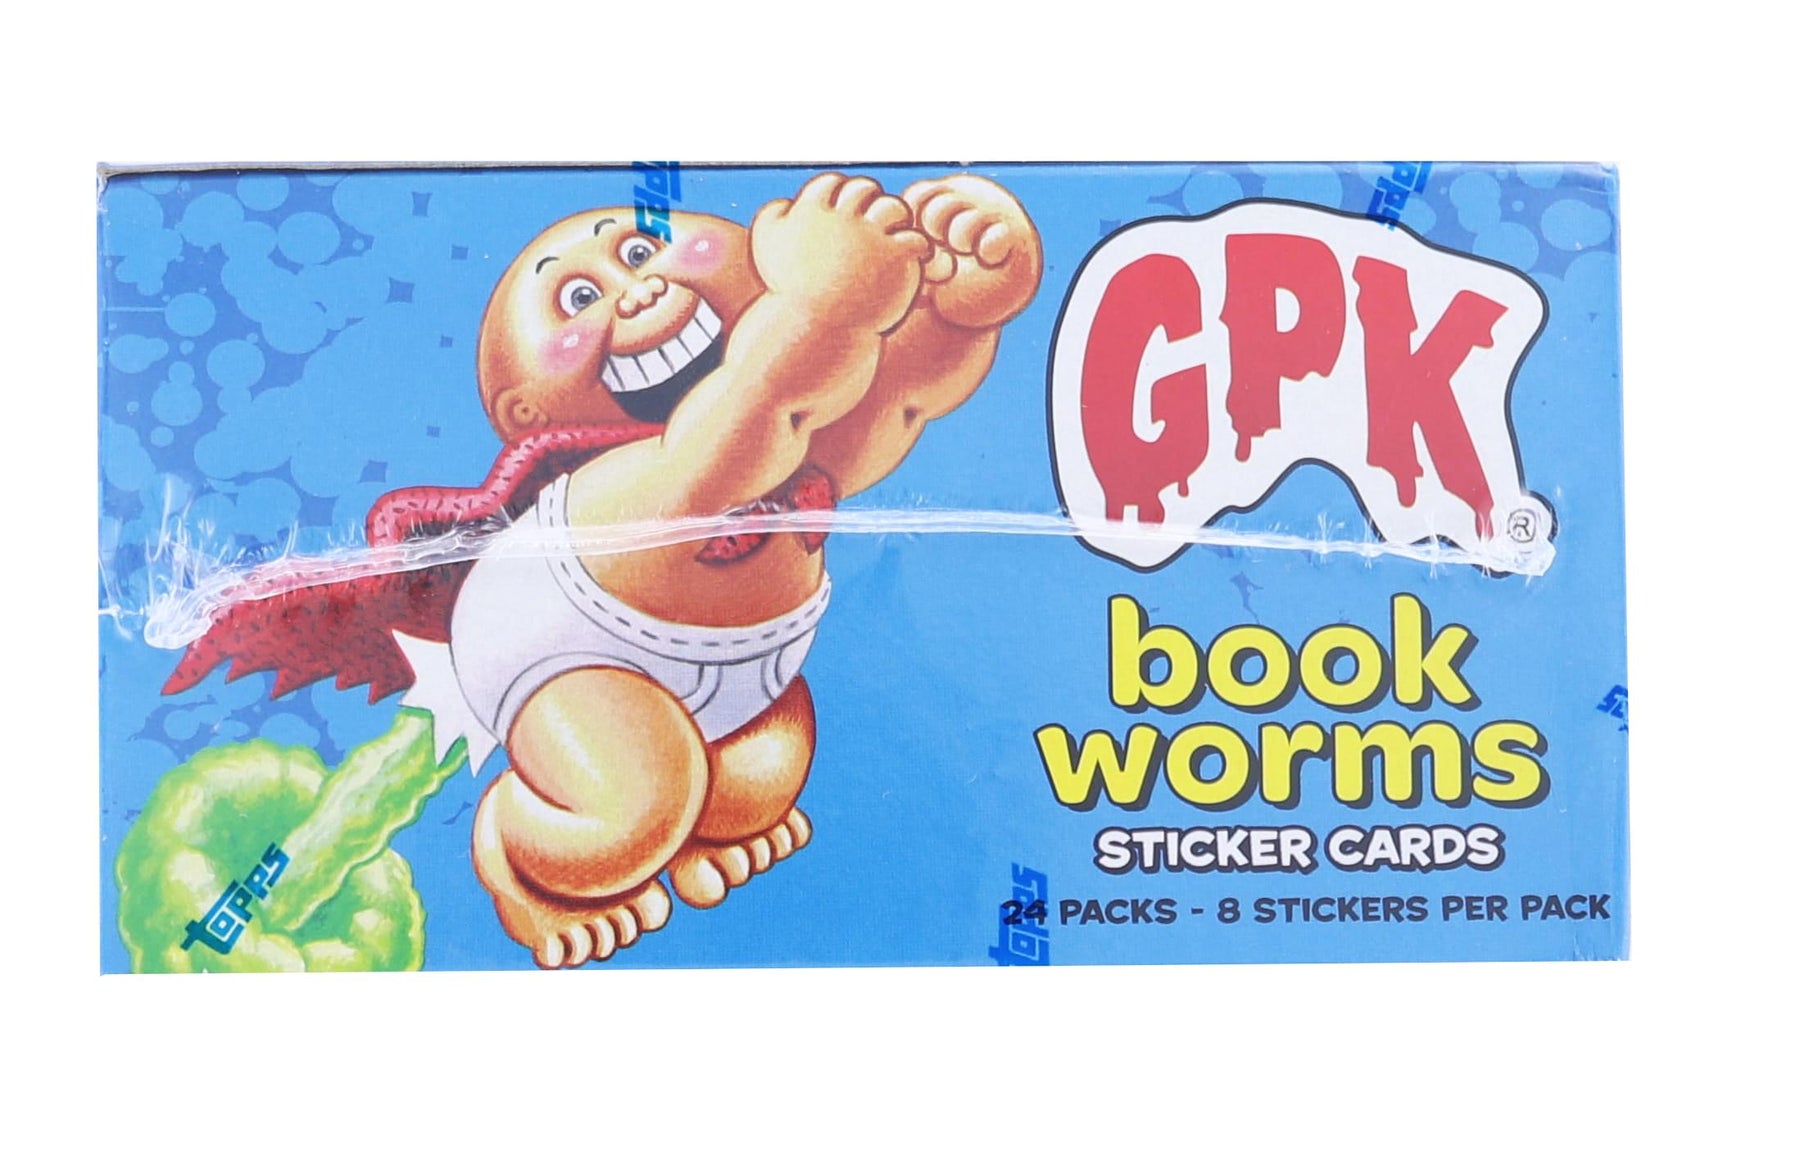 Garbage Pail Kids 2022 Topps BookWorms Hobby Box | 24 Packs Per Box